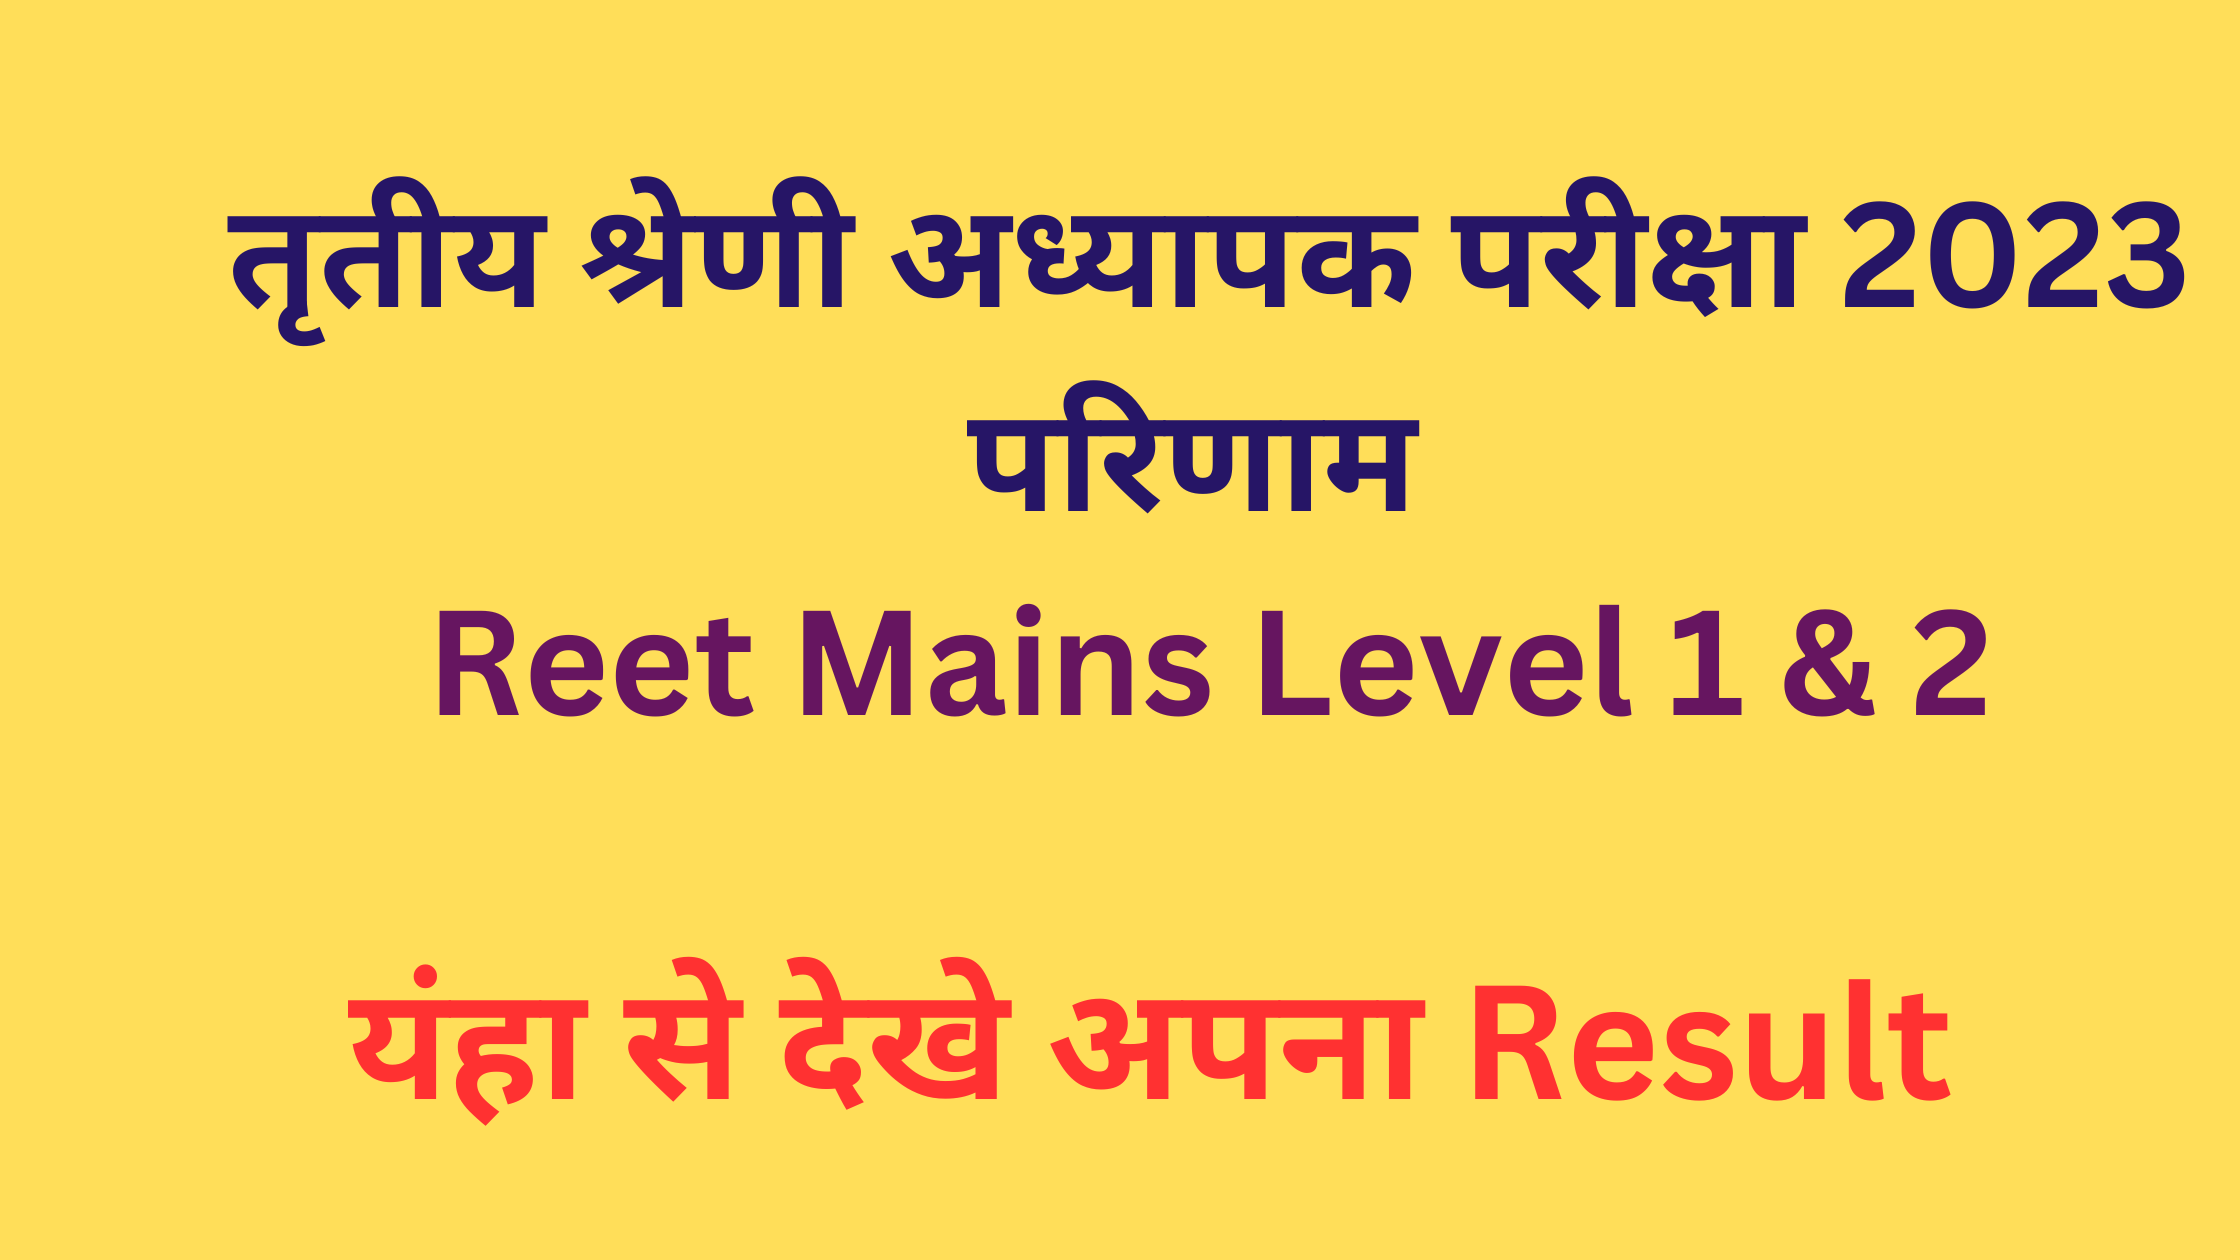 Rajasthan Third Grade Teacher Result Level 1 & 2 | REET Mains Result 2023 तृतीय श्रेणी अध्यापक परीक्षा परिणाम